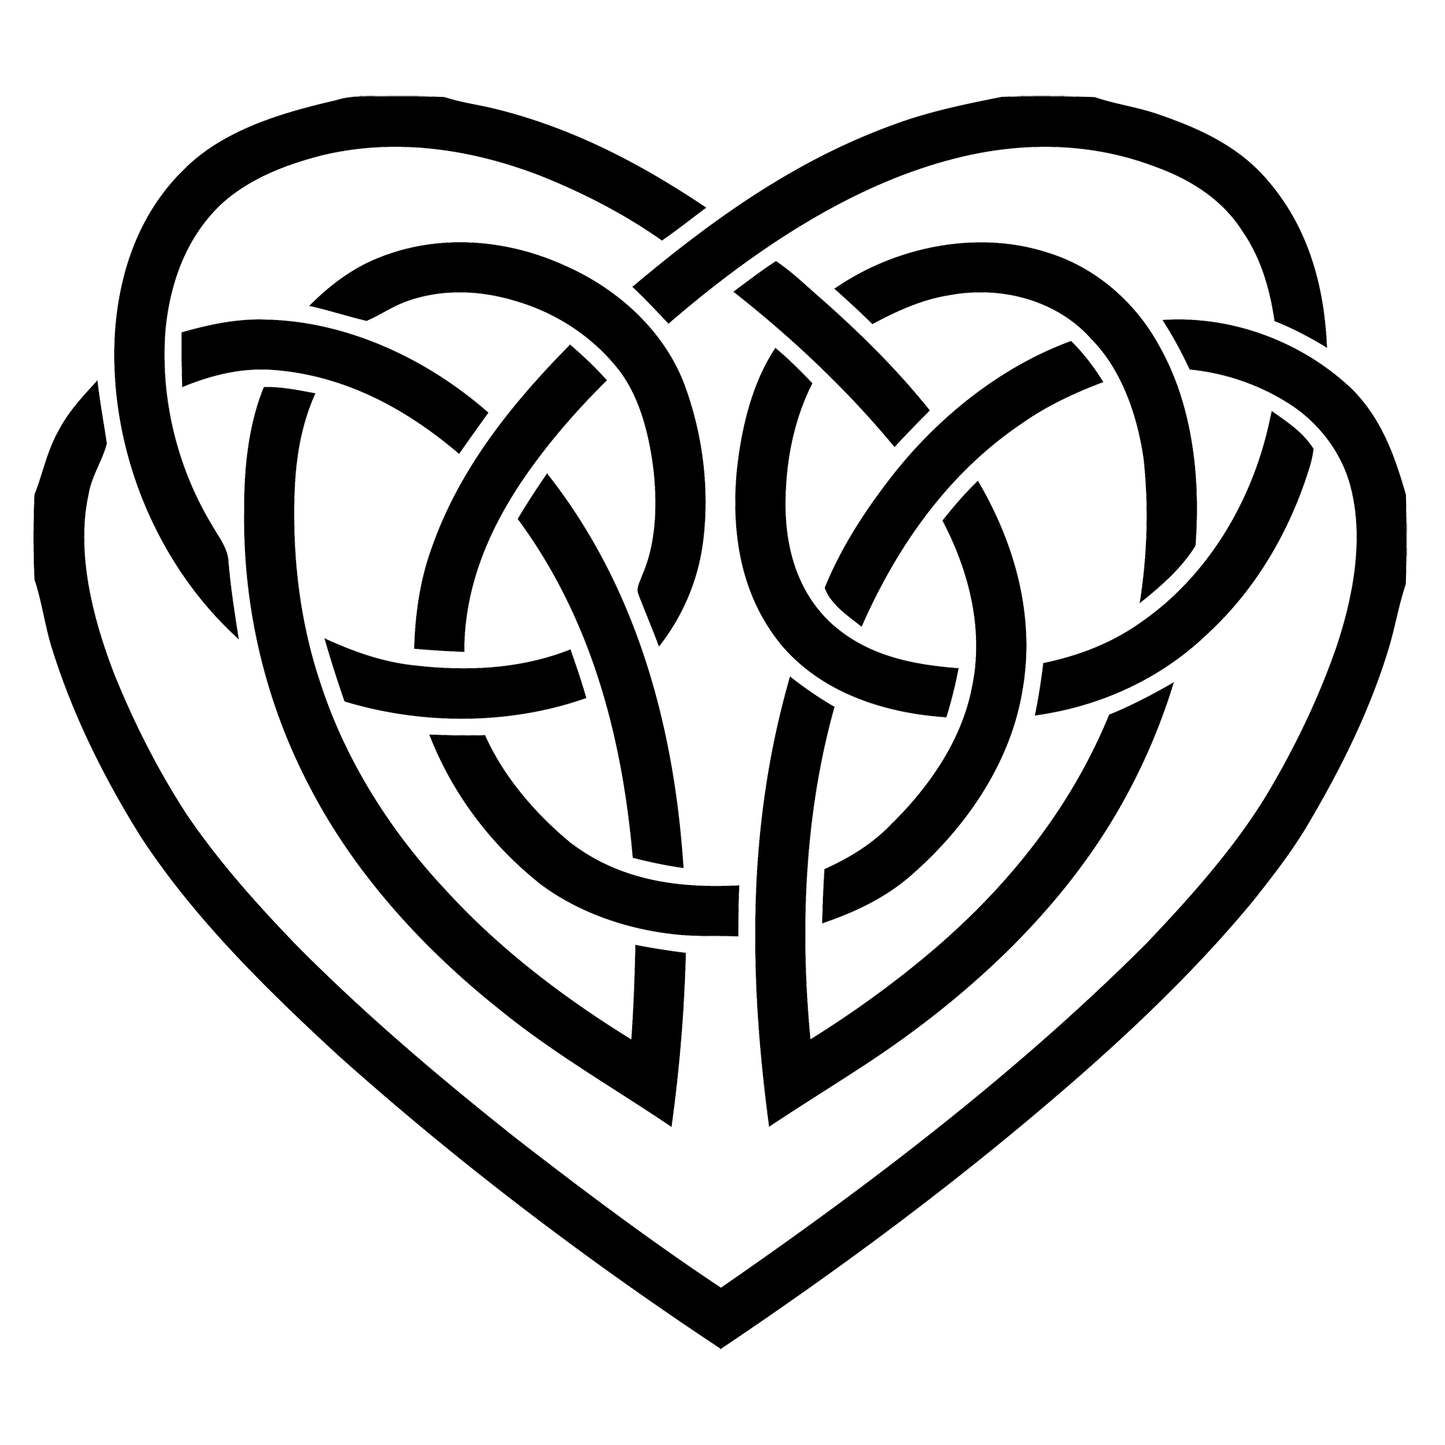 Celtic Knot Heart Vinyl Decal Sticker